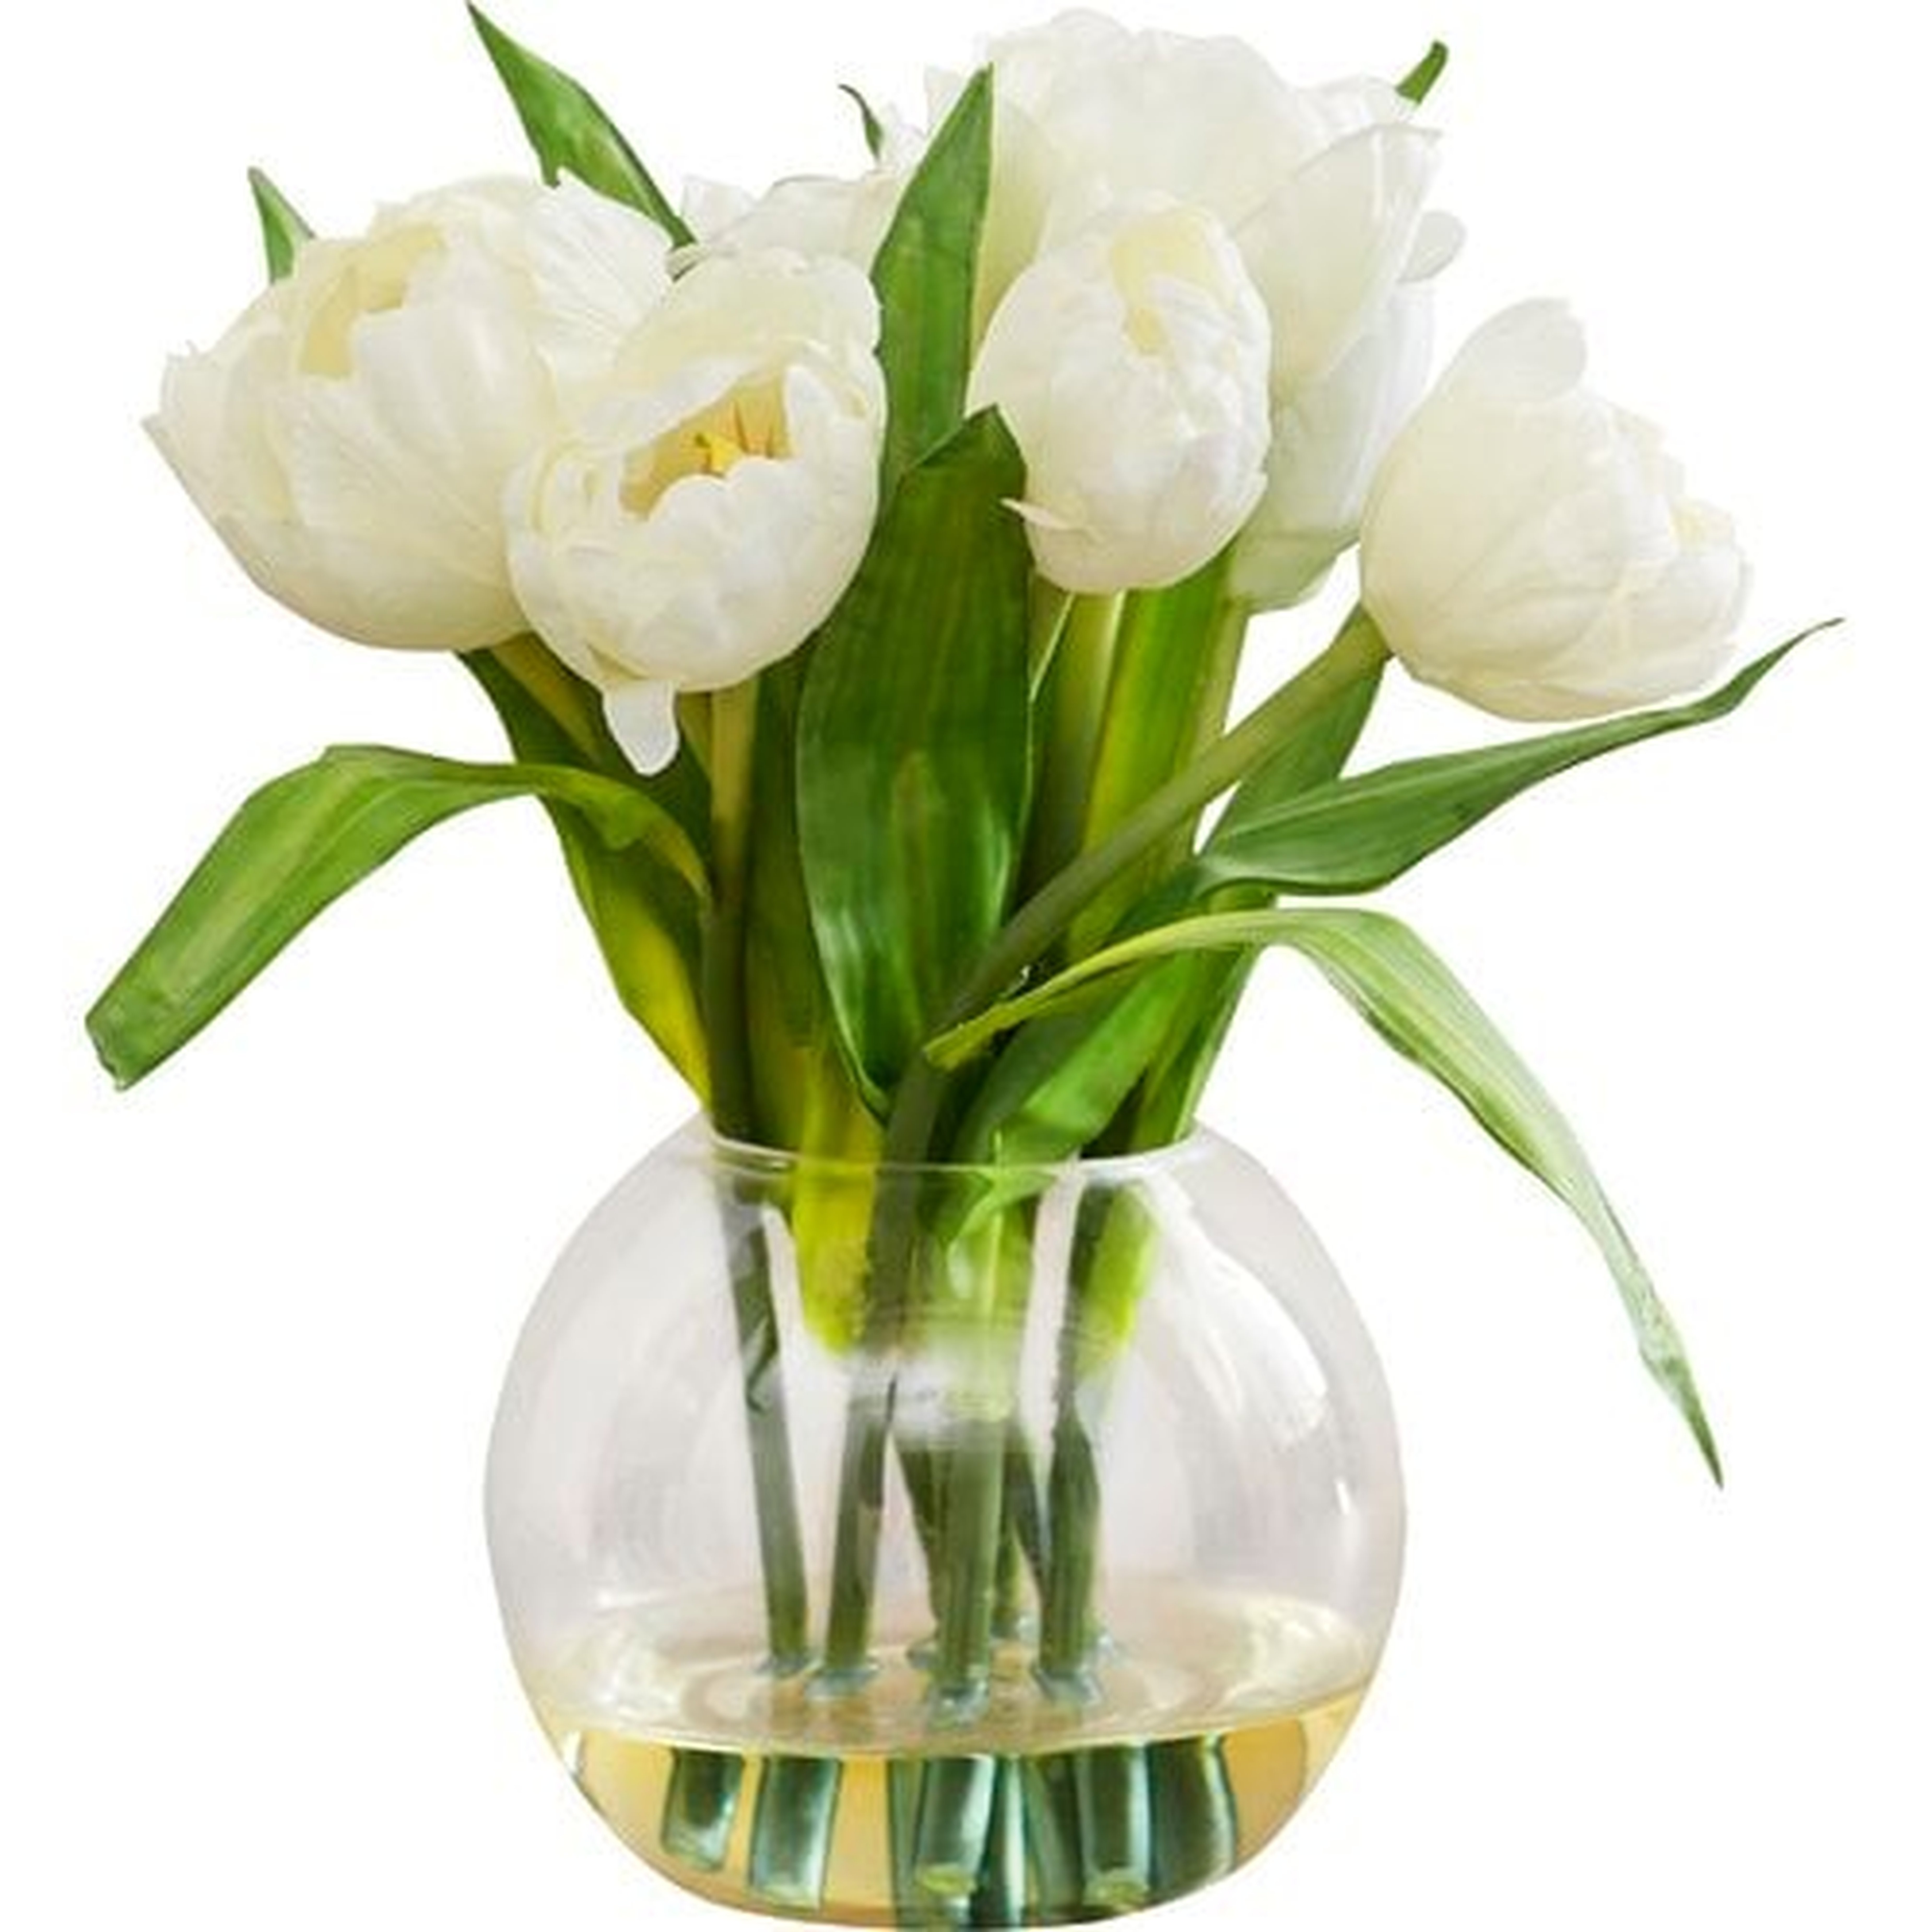 Tulips Arrangement with Vase, White - Wayfair